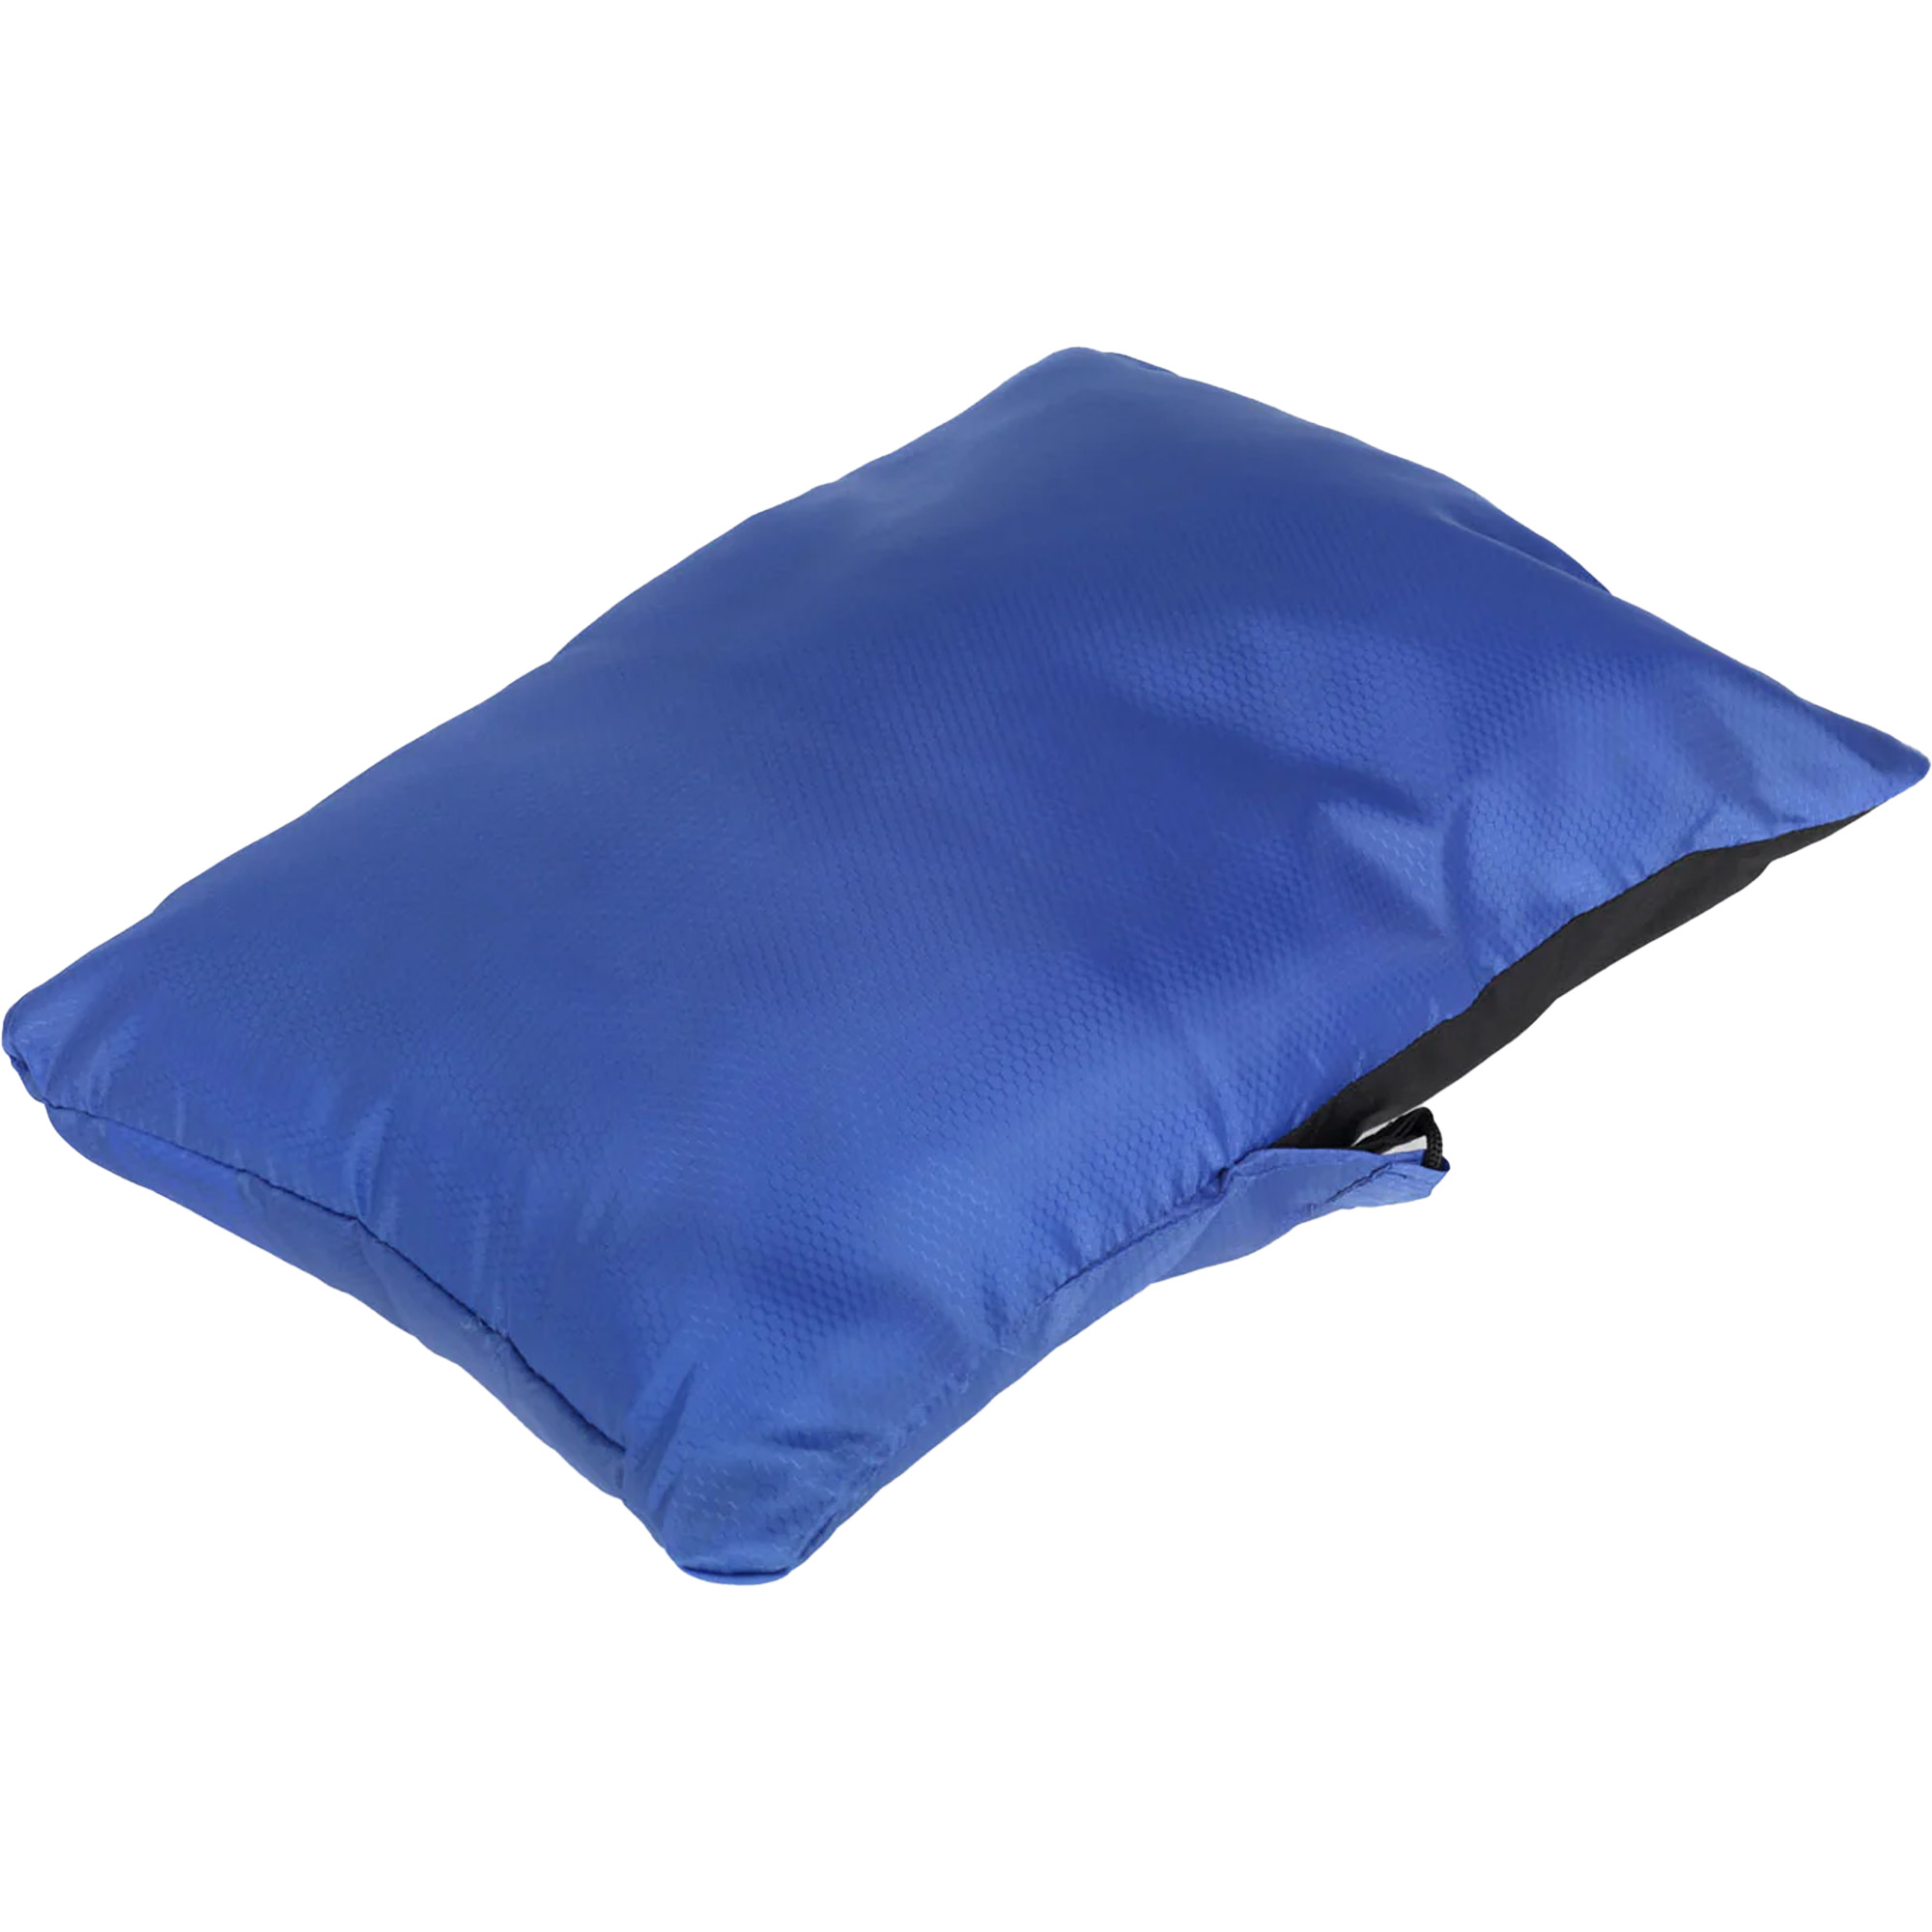 Snugpak Snuggy Headrest Compact Insulated Travel Pillow